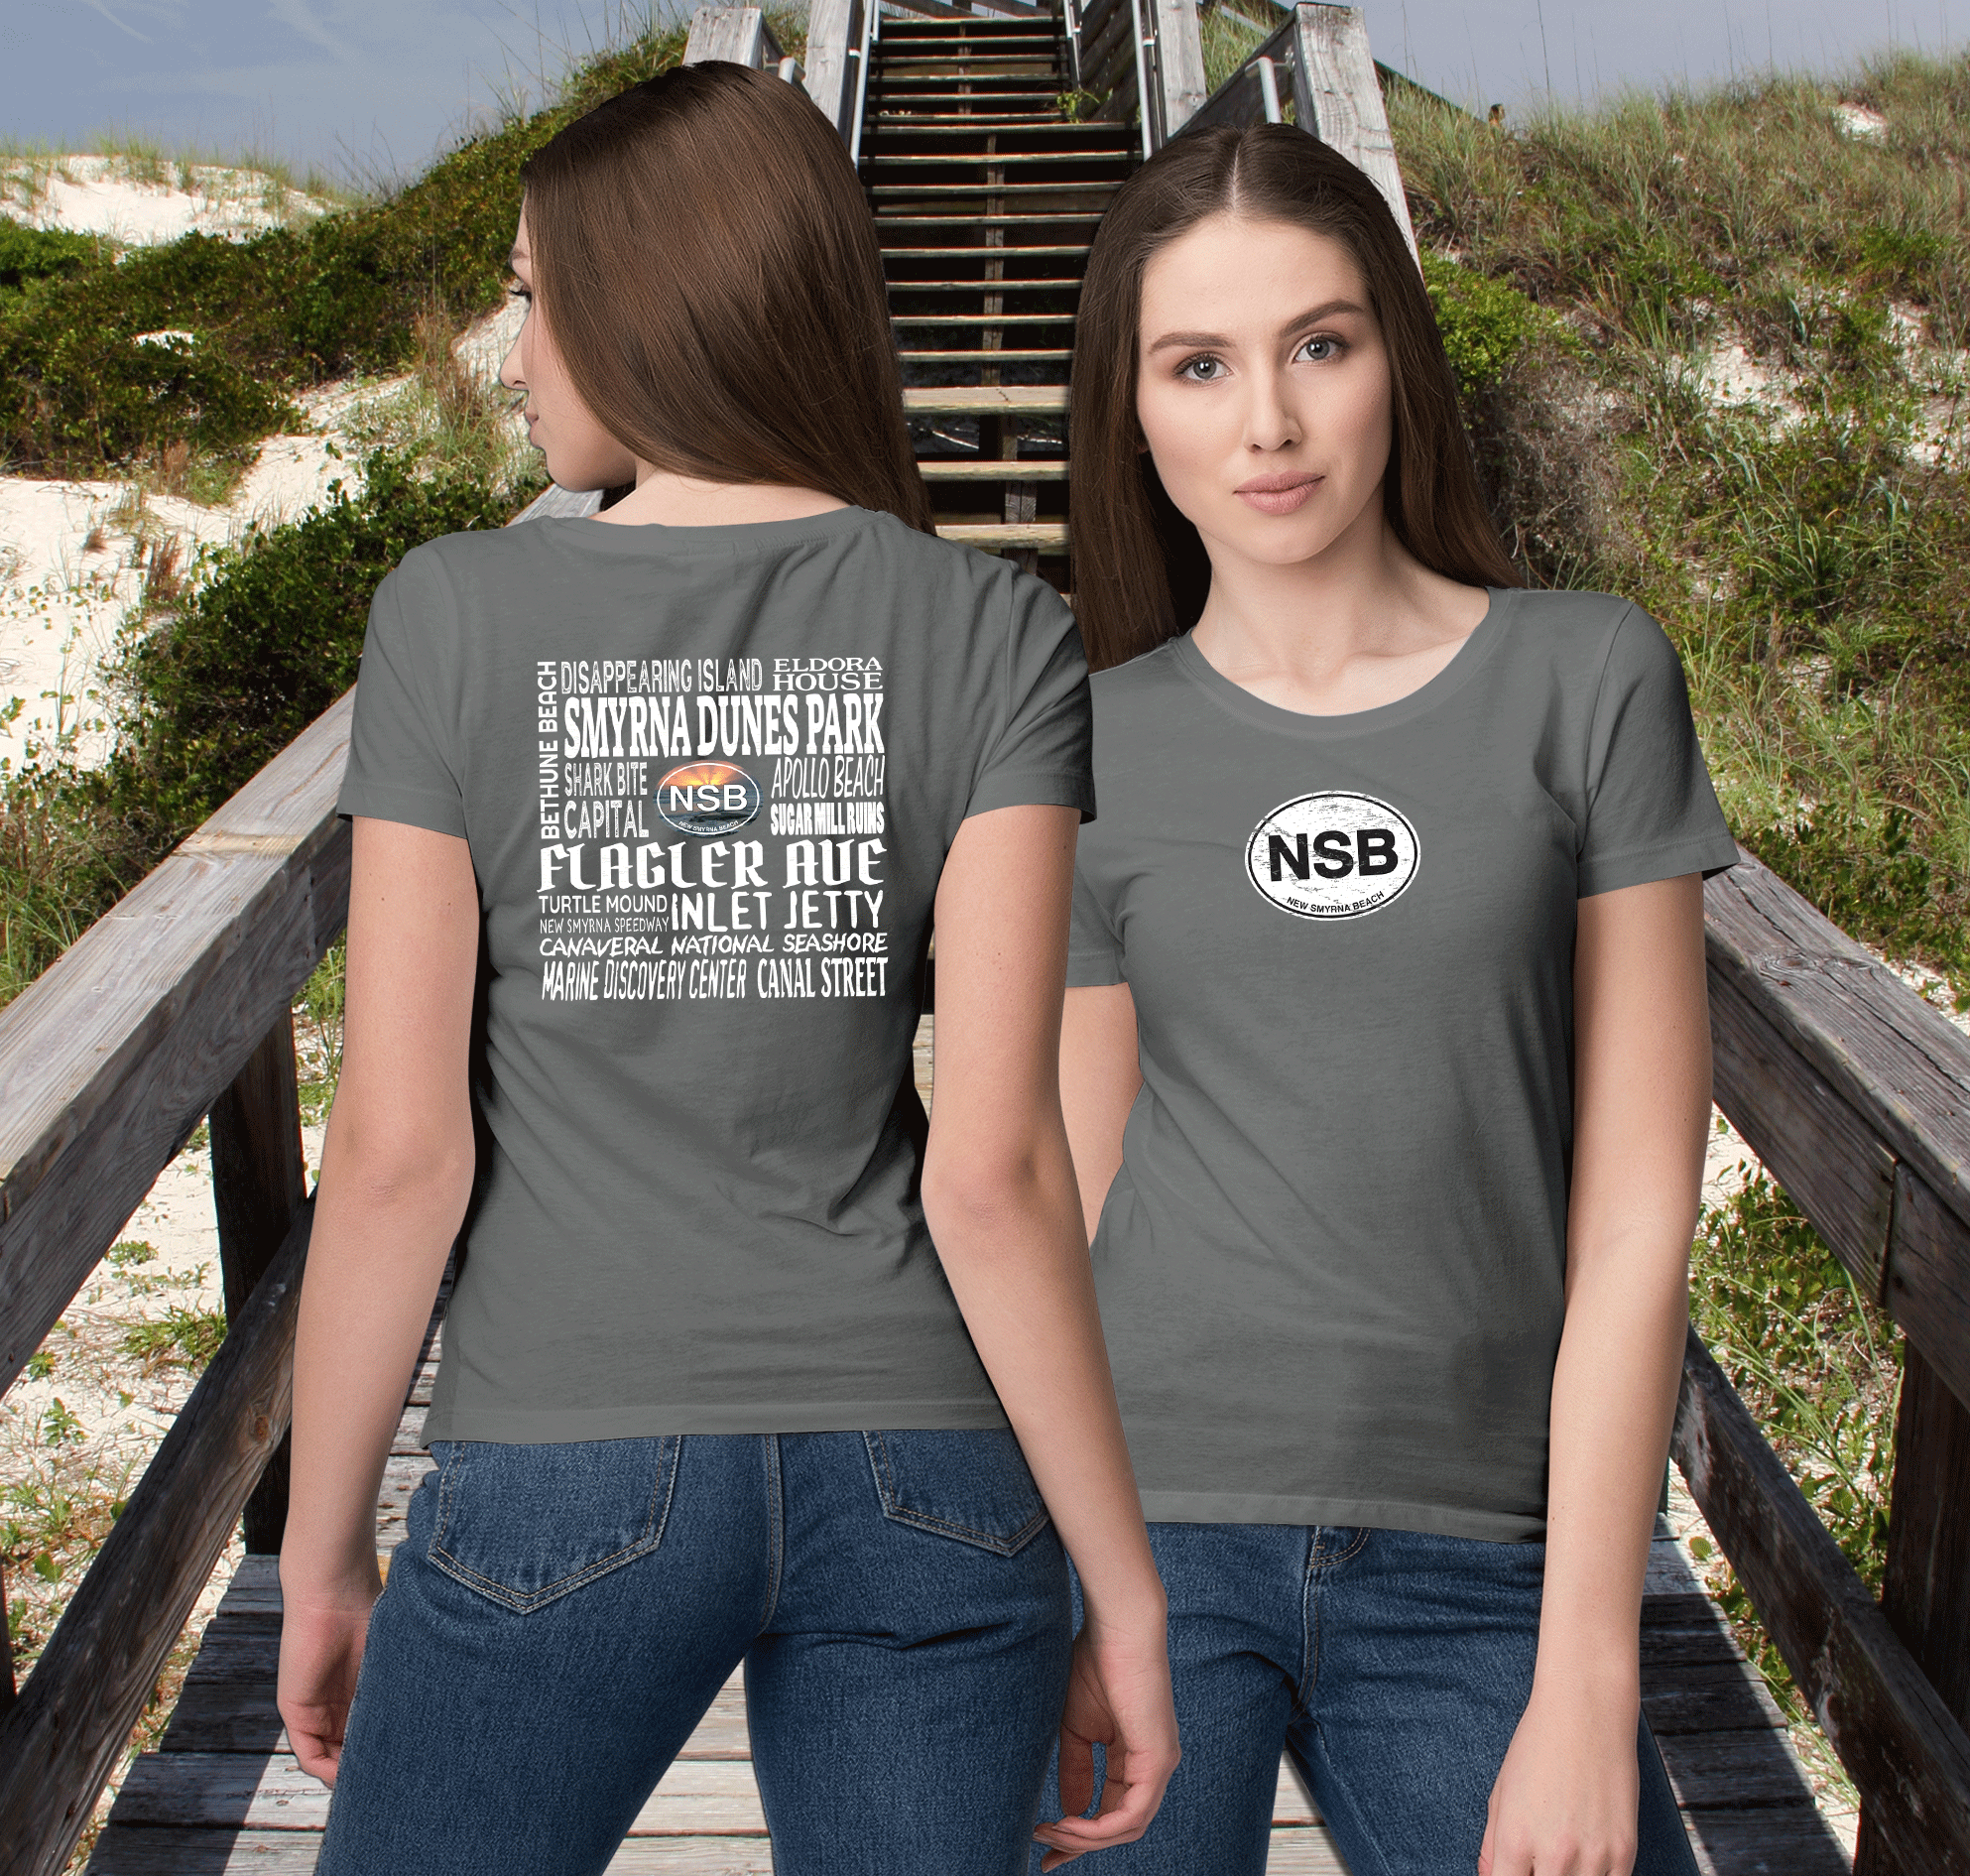 New Smyrna Beach Women's Destinations T-Shirt Souvenir - My Destination Location